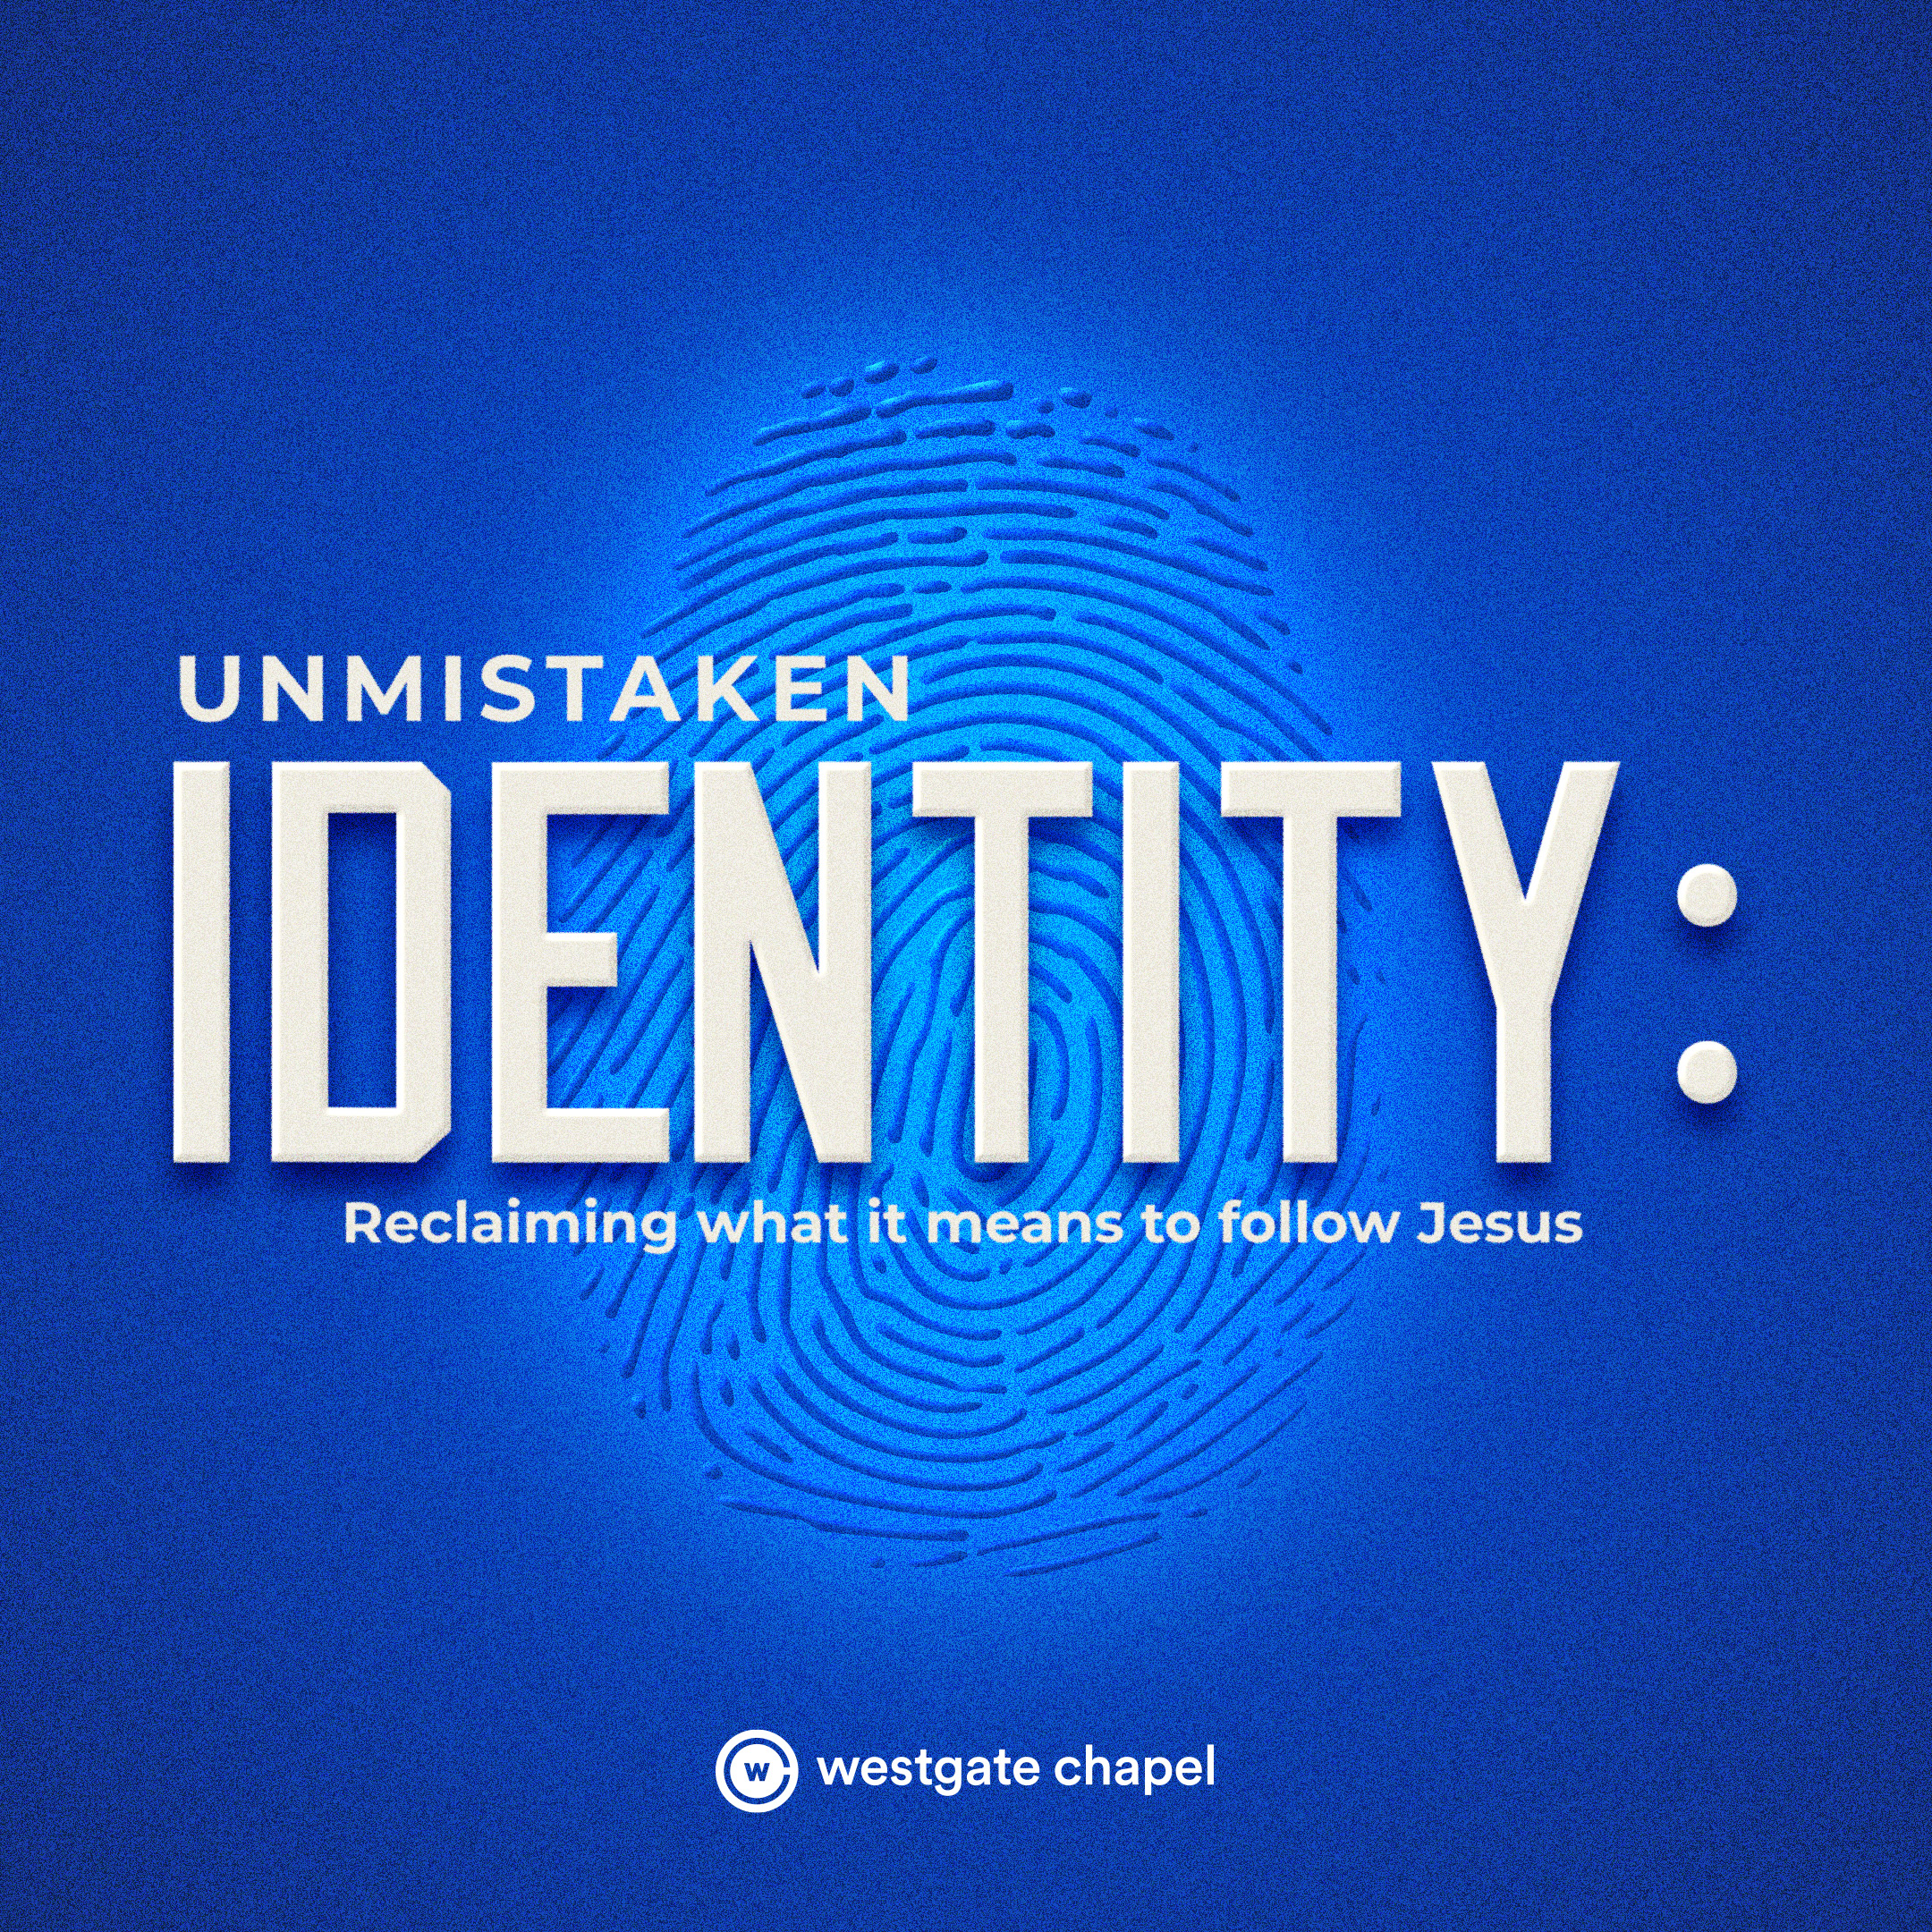 UnMistaken Identity: From Isolation to Community